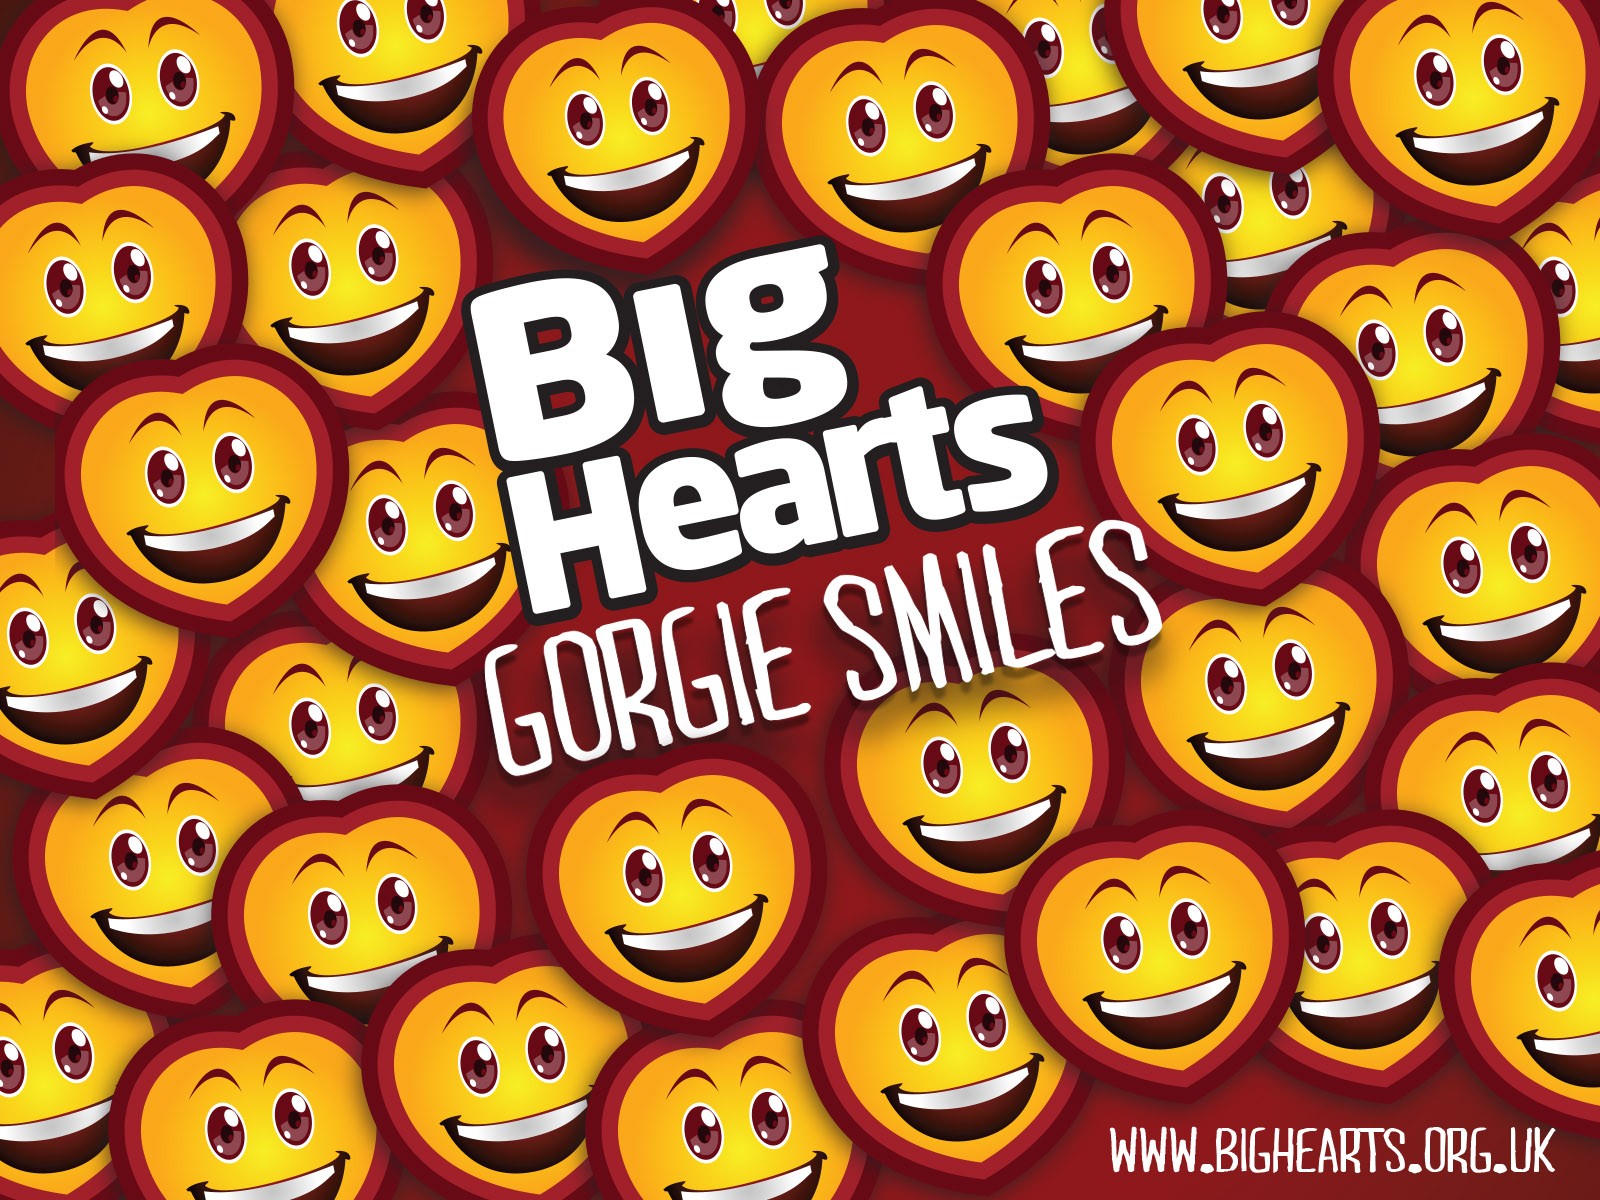  » Help us make Gorgie Smile!